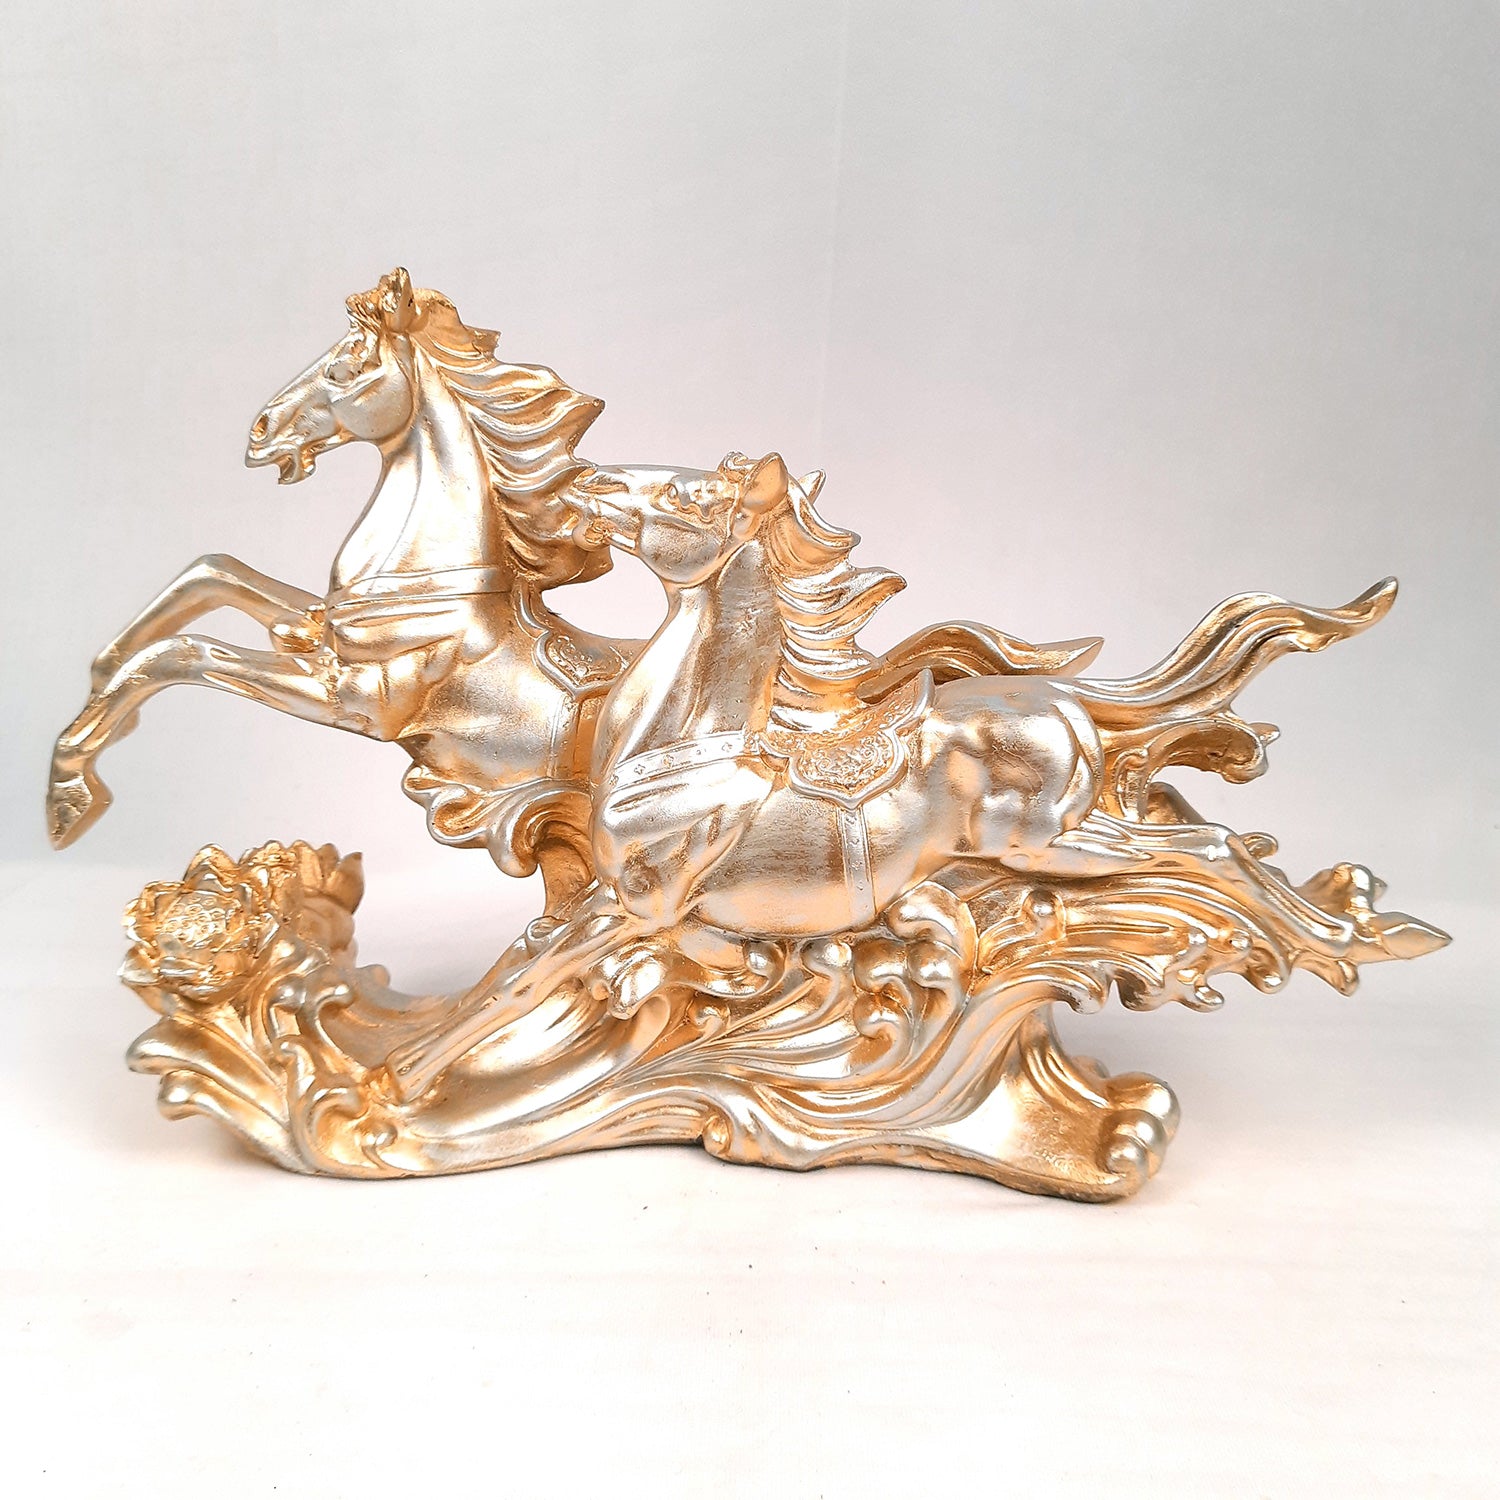 Two Running Horse Statue Figurines | Horse Showpiece Vastu, Fengshui Showpieces - for Home, Table, Shelf, Good Luck, Vastu & Office Desk Decor - 14 Inch - Apkamart #Color_Golden